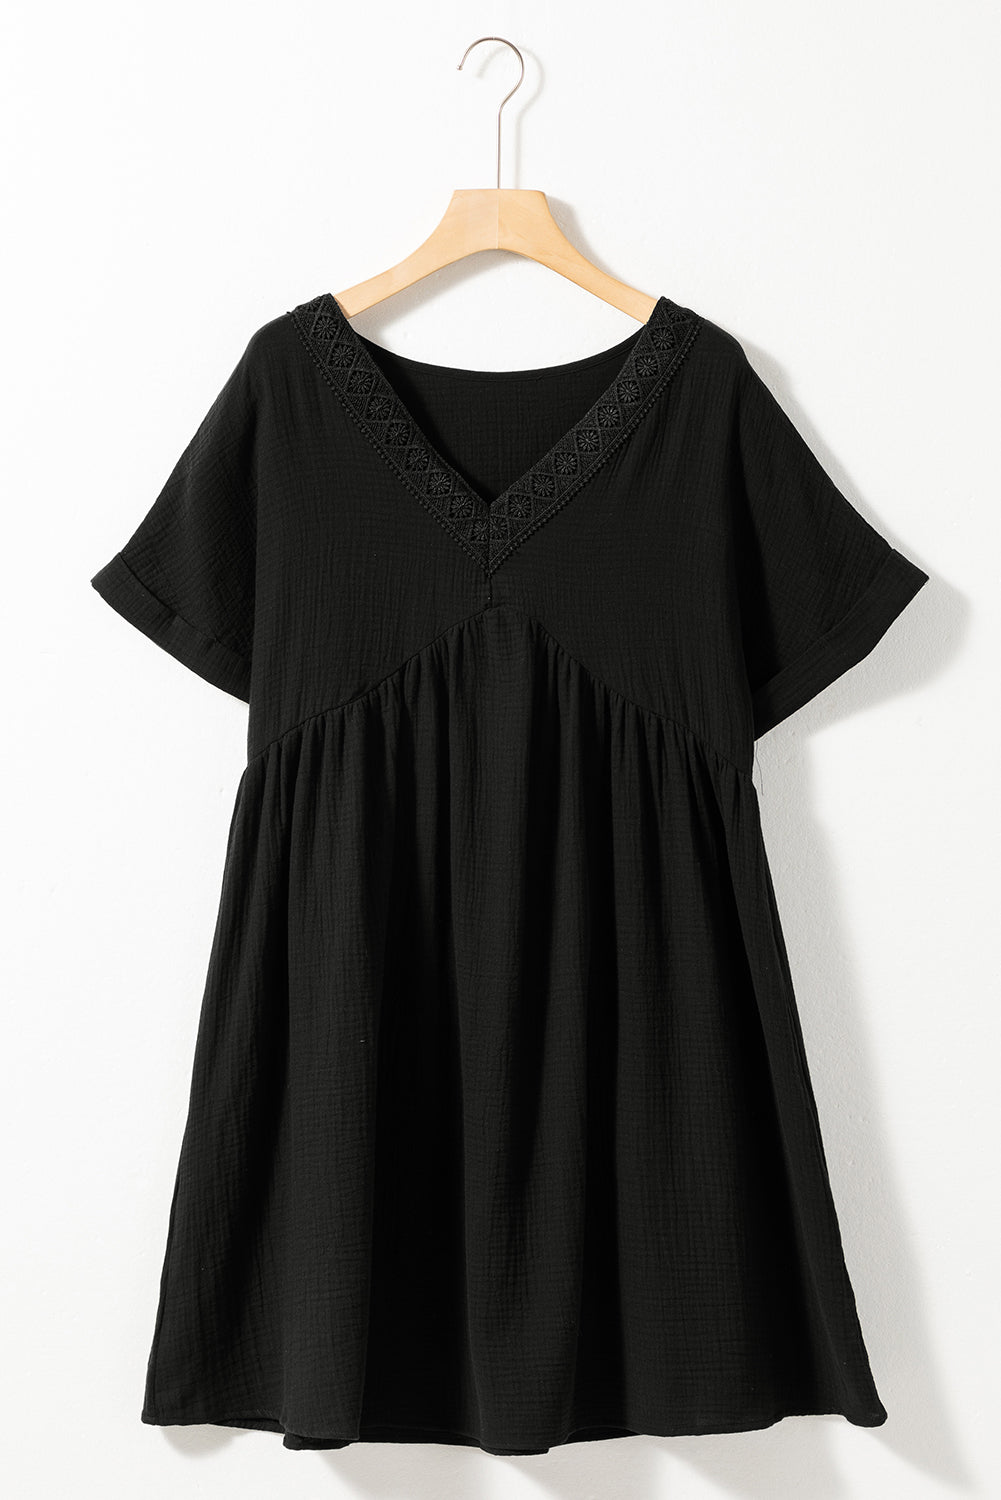 Beige Mini Boho Dress with Sleeves | Lace Empire Waist Mini Dress